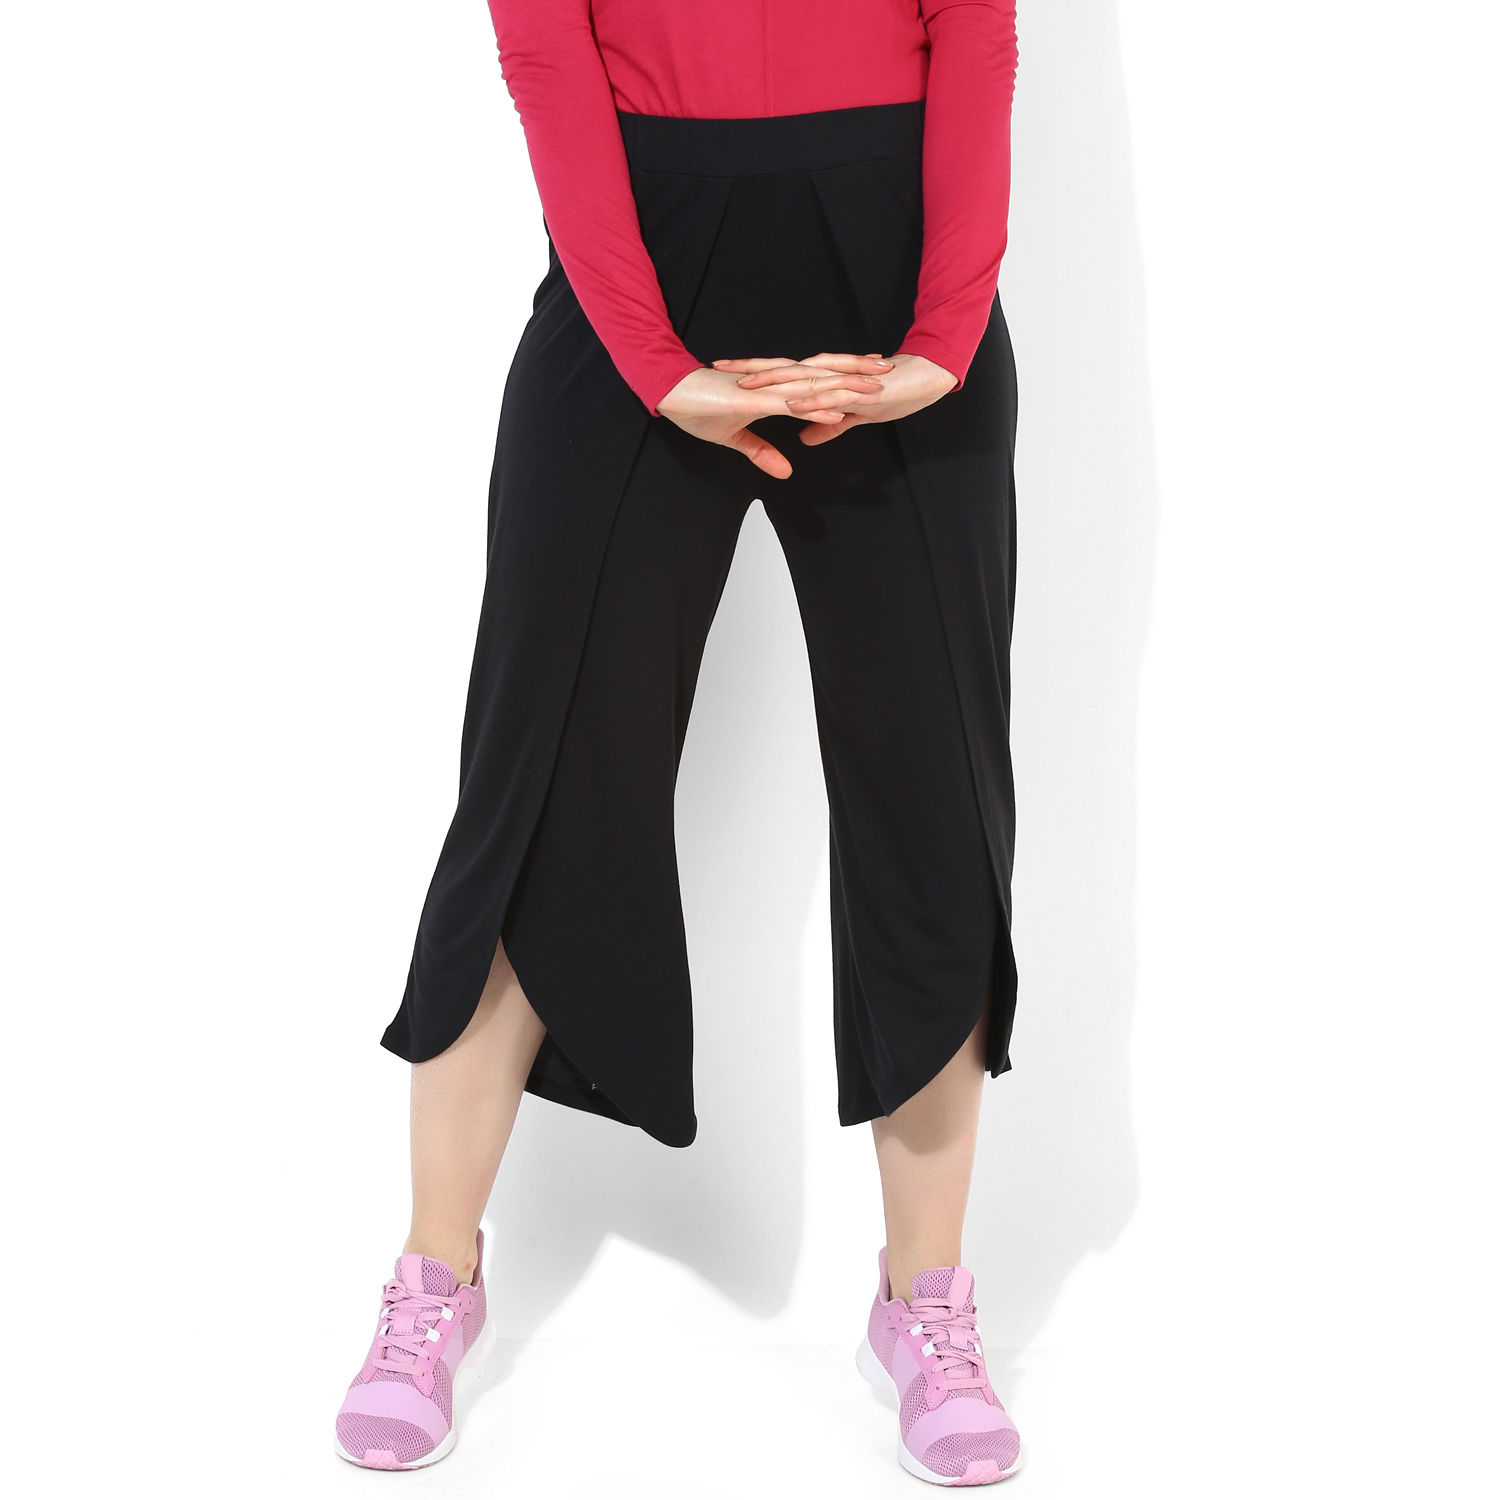 Silvertraq Women's Yoga Tulip Pants - Black (XS)